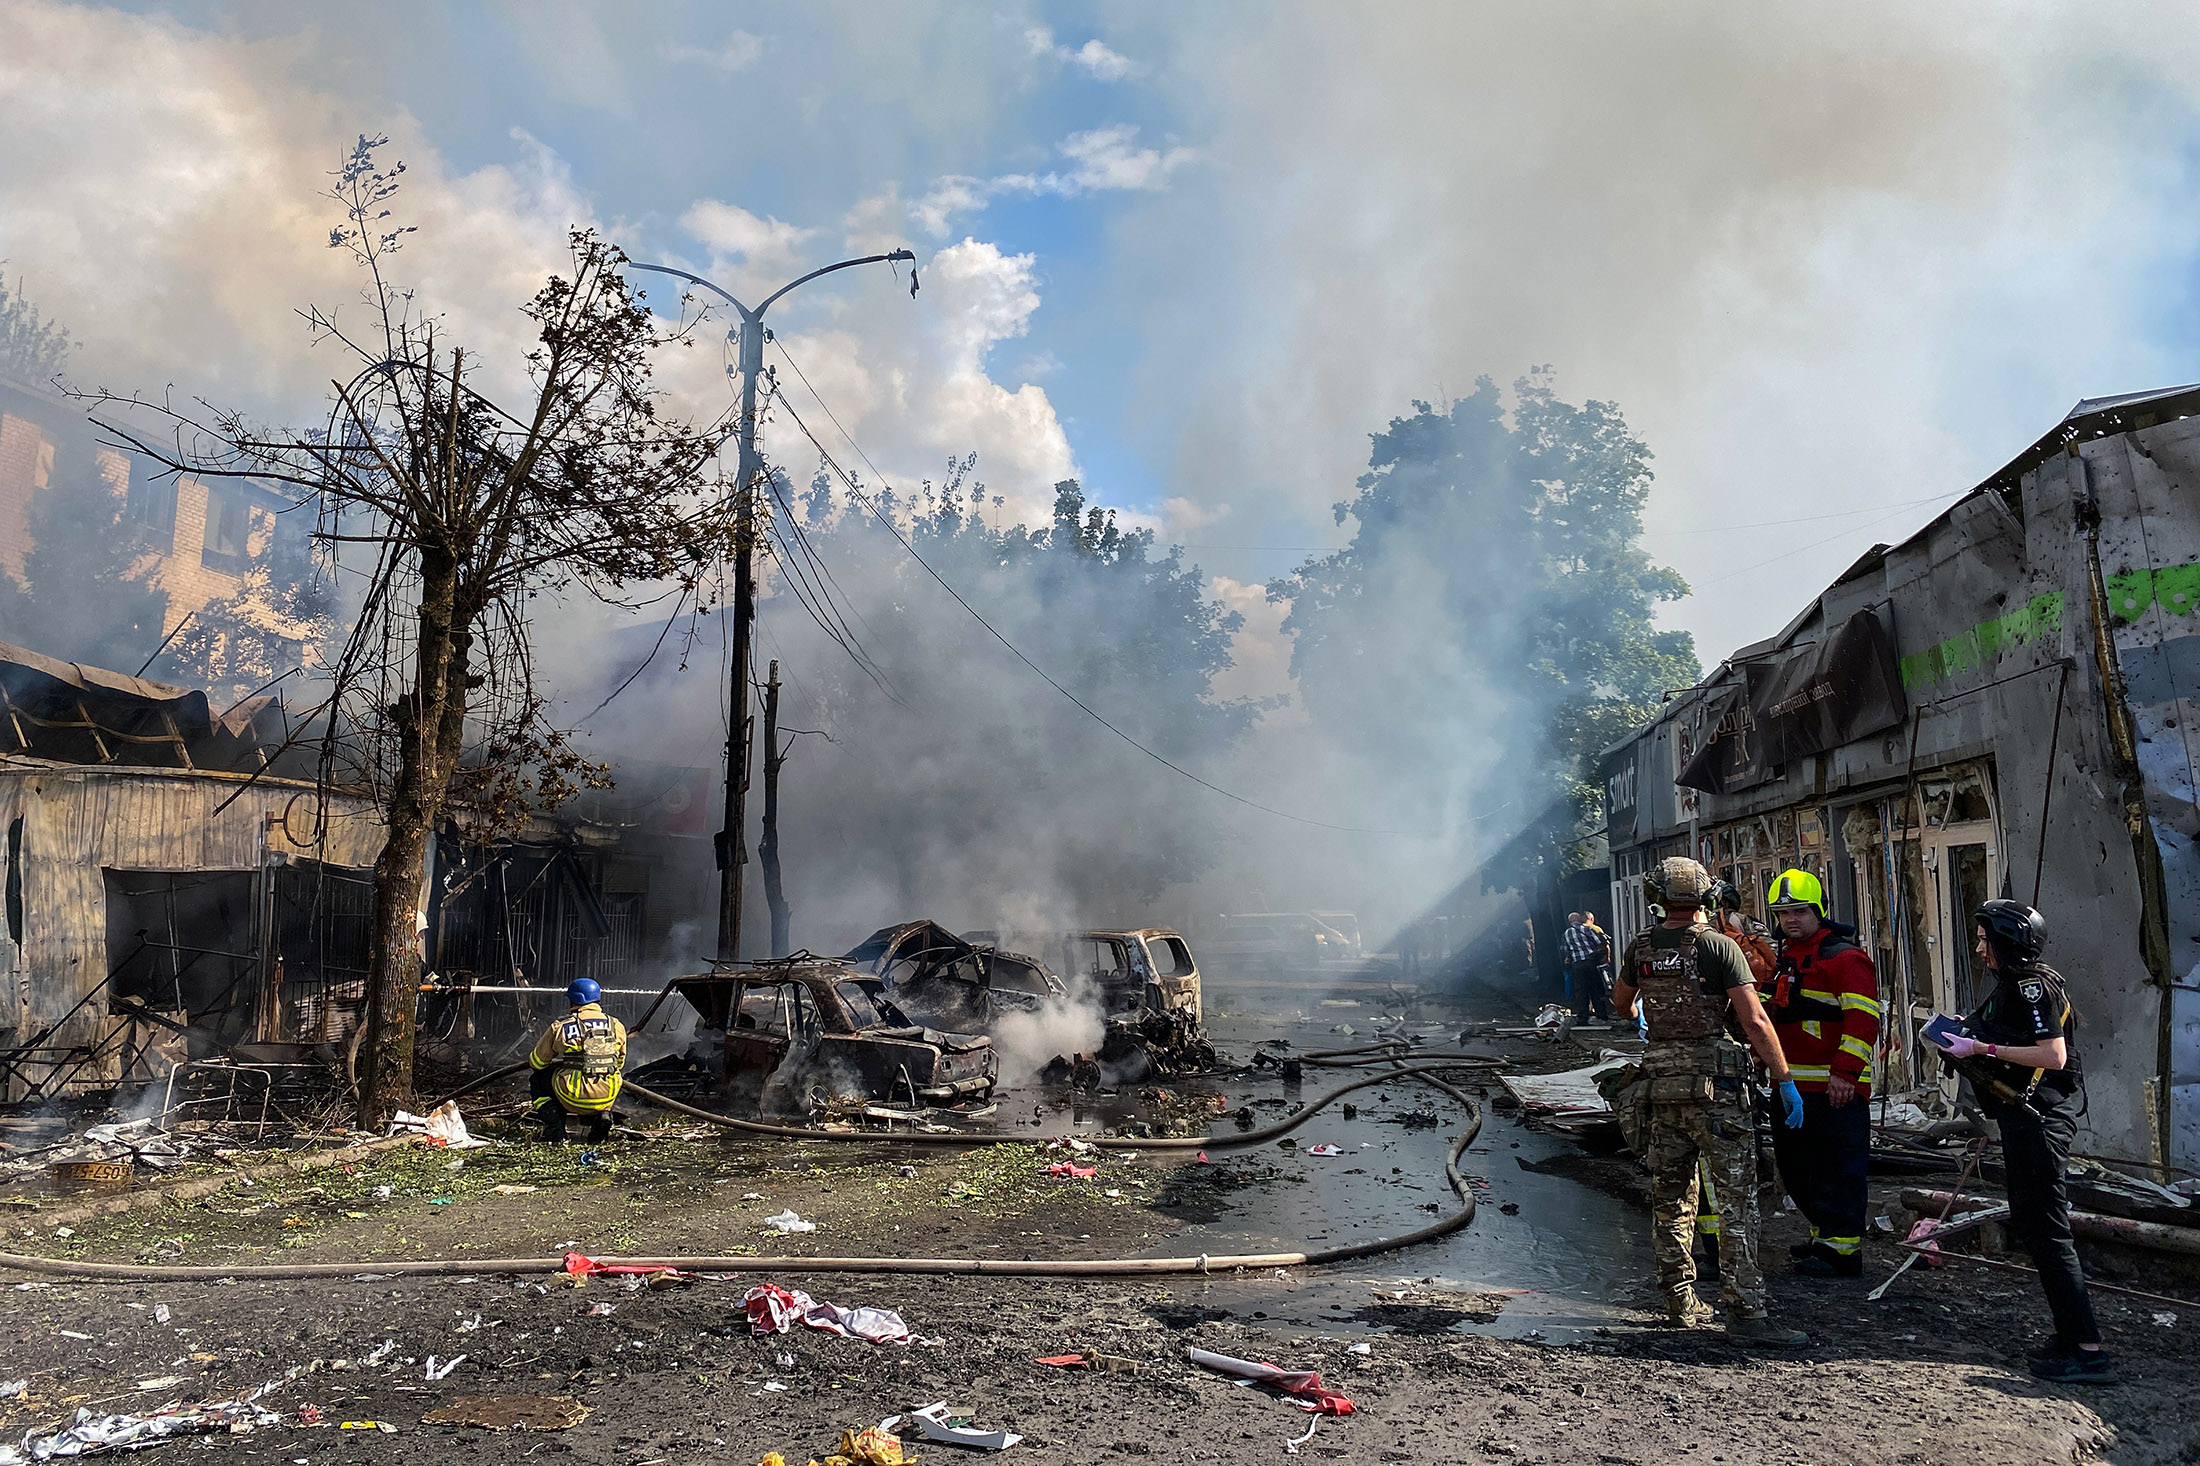 Firefighters extinguish a fire in a market following rocket strikes in Kostiantynivka, Ukraine, on Sept. 6.